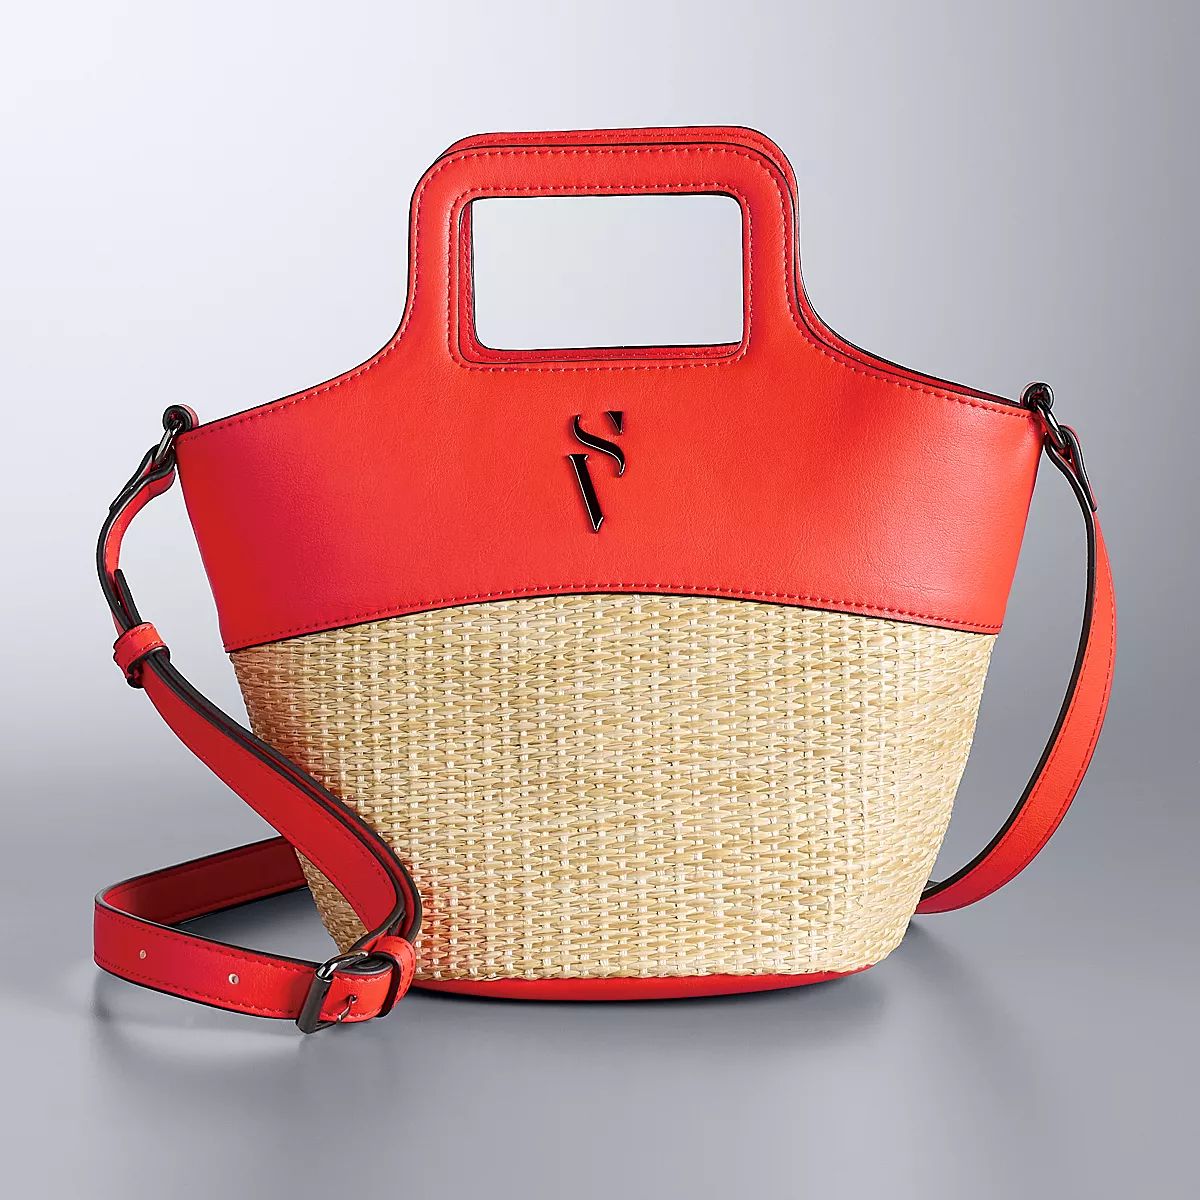 Simply Vera Vera Wang Top Handle Straw Crossbody Bag | Kohl's